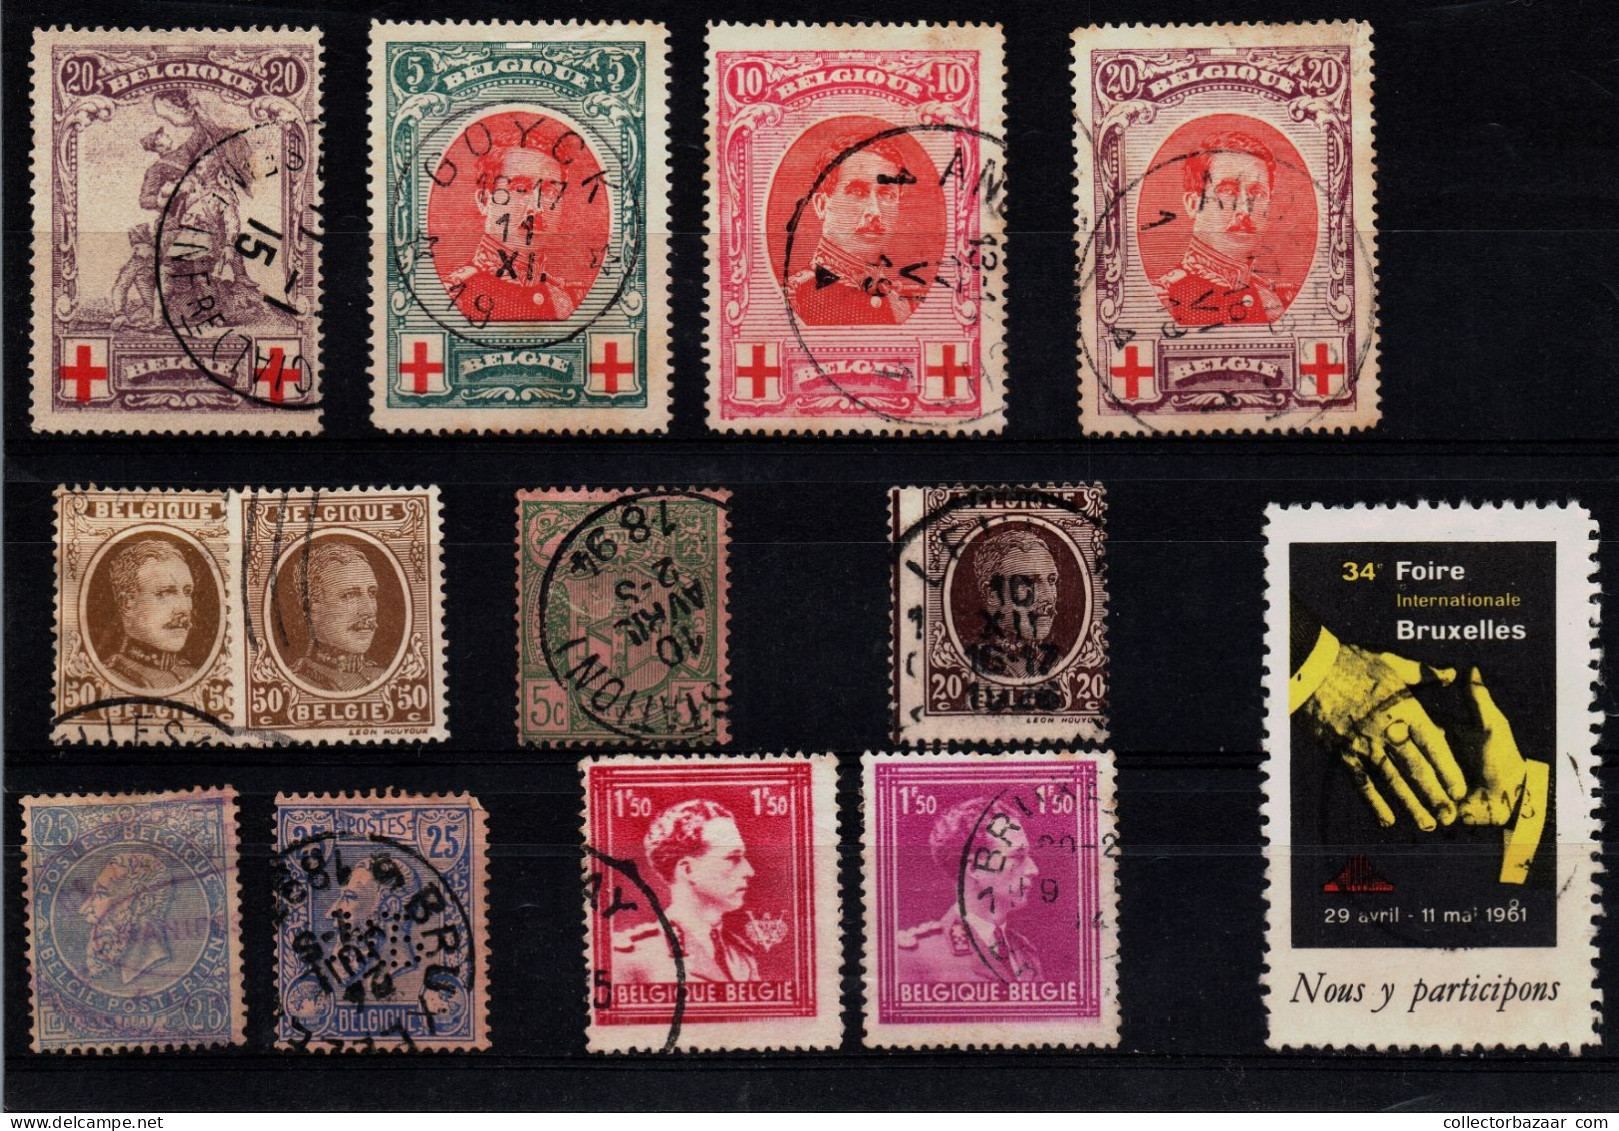 Belgium Belgique used key stamps postmarks varieties SOTN Catalogue value +$1200